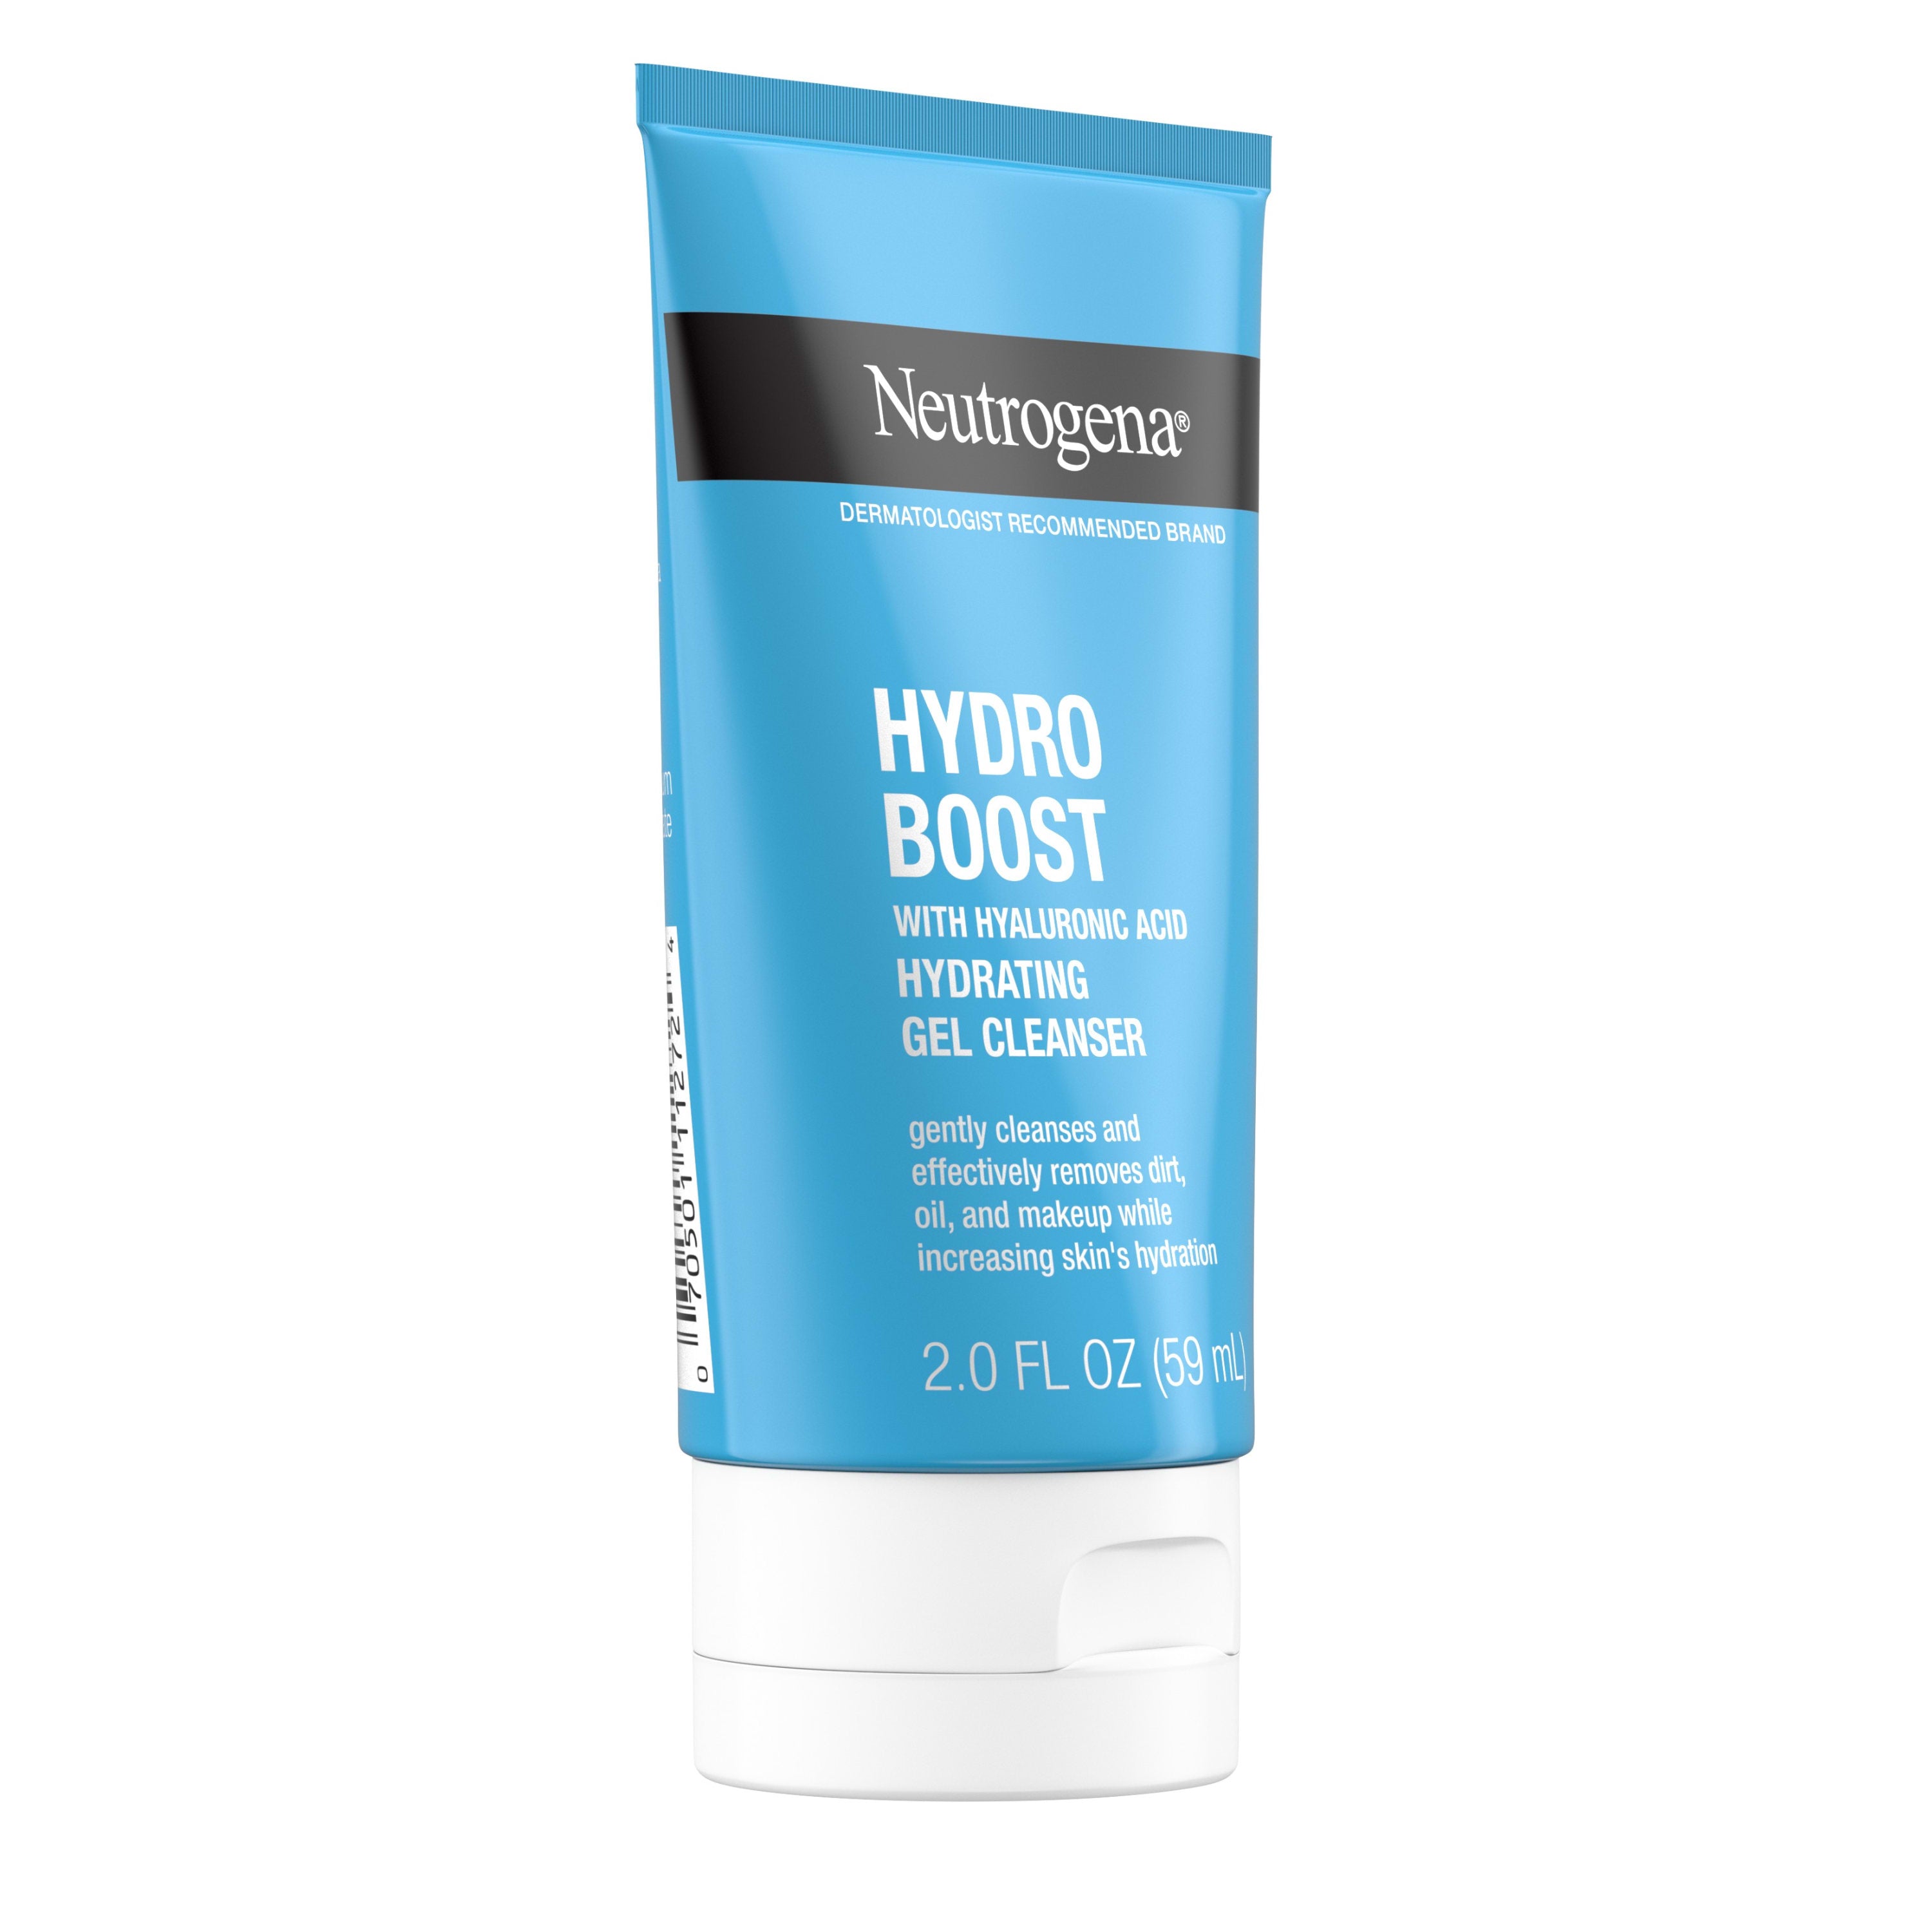 Neutrogena Hydro Boost Hyaluronic Acid Facial Cleansing Gel, 2 fl. oz | MTTS282